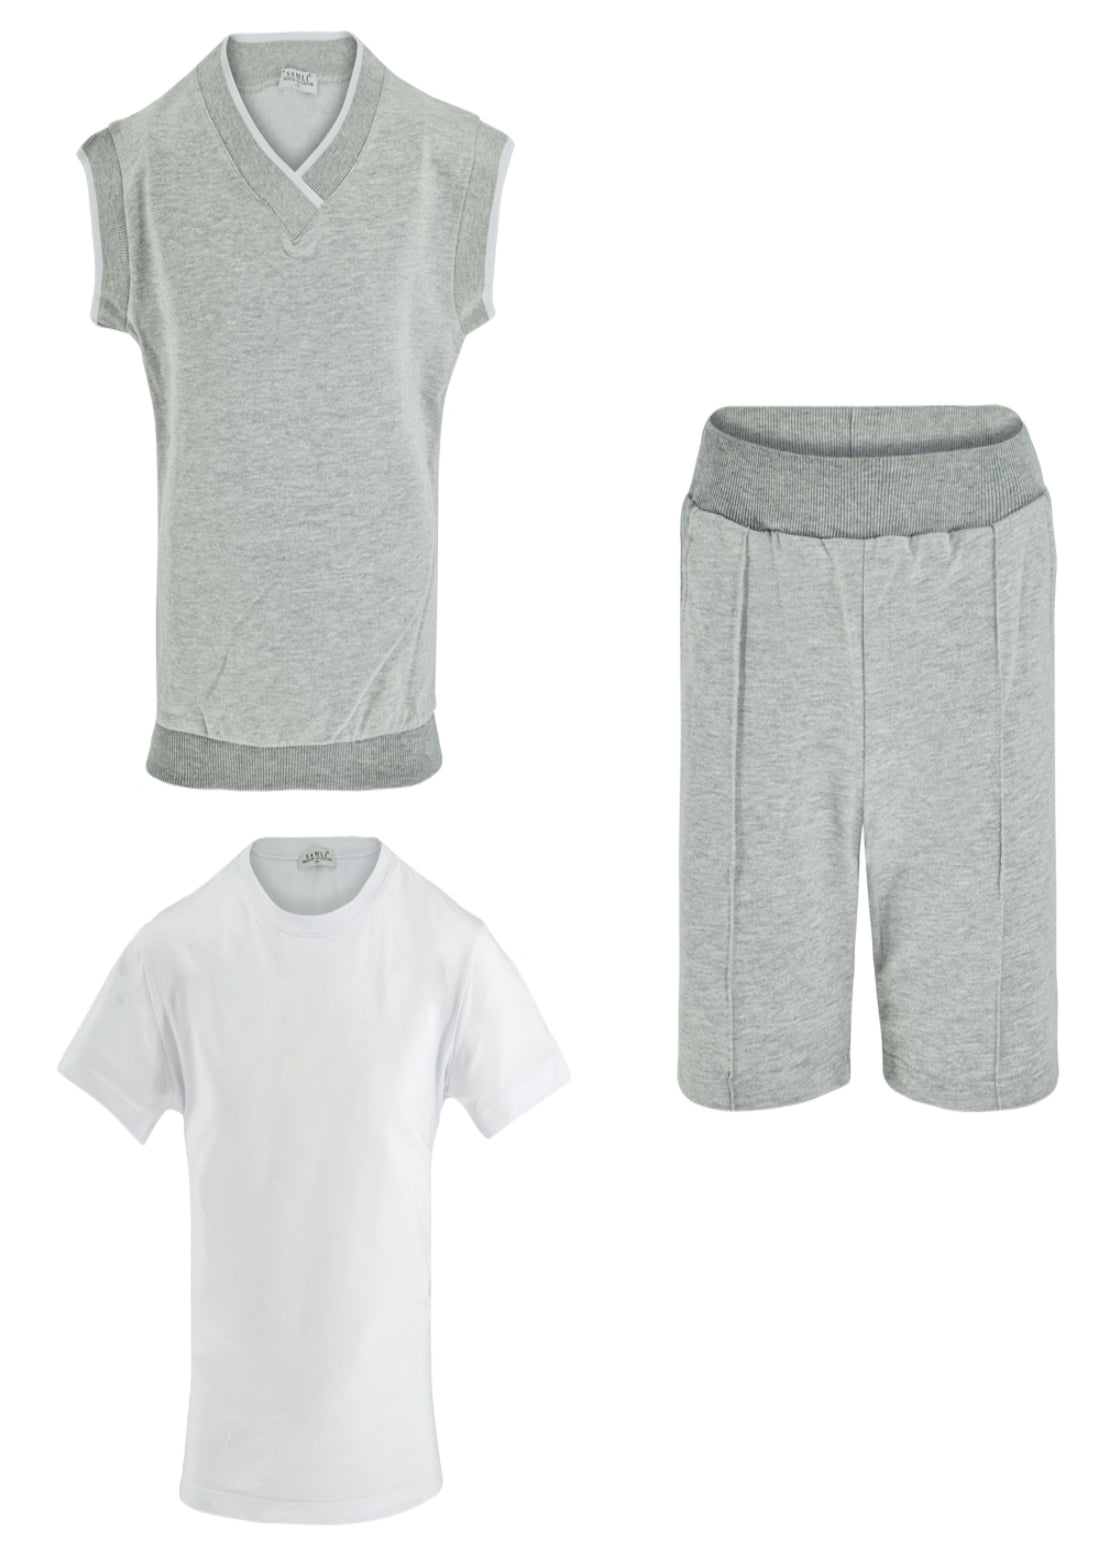 Boys Grey Vest T shirt and Shorts Set